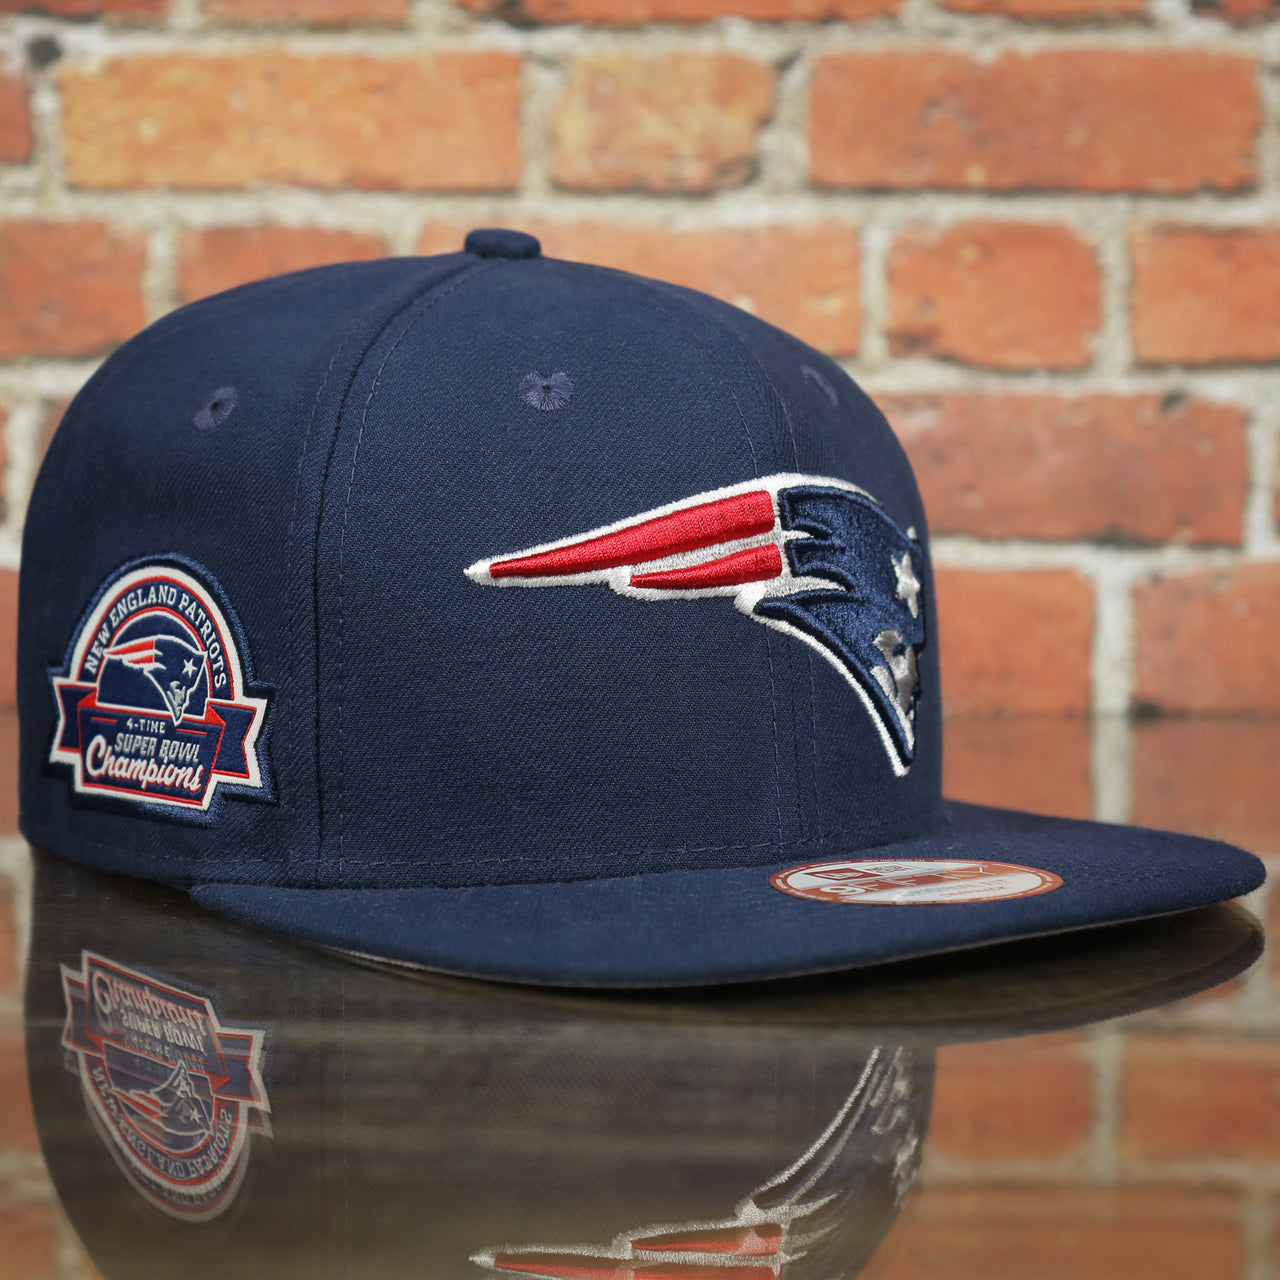 New England Patriots Throwback 4X Super Bowl Champions Snapback Hat